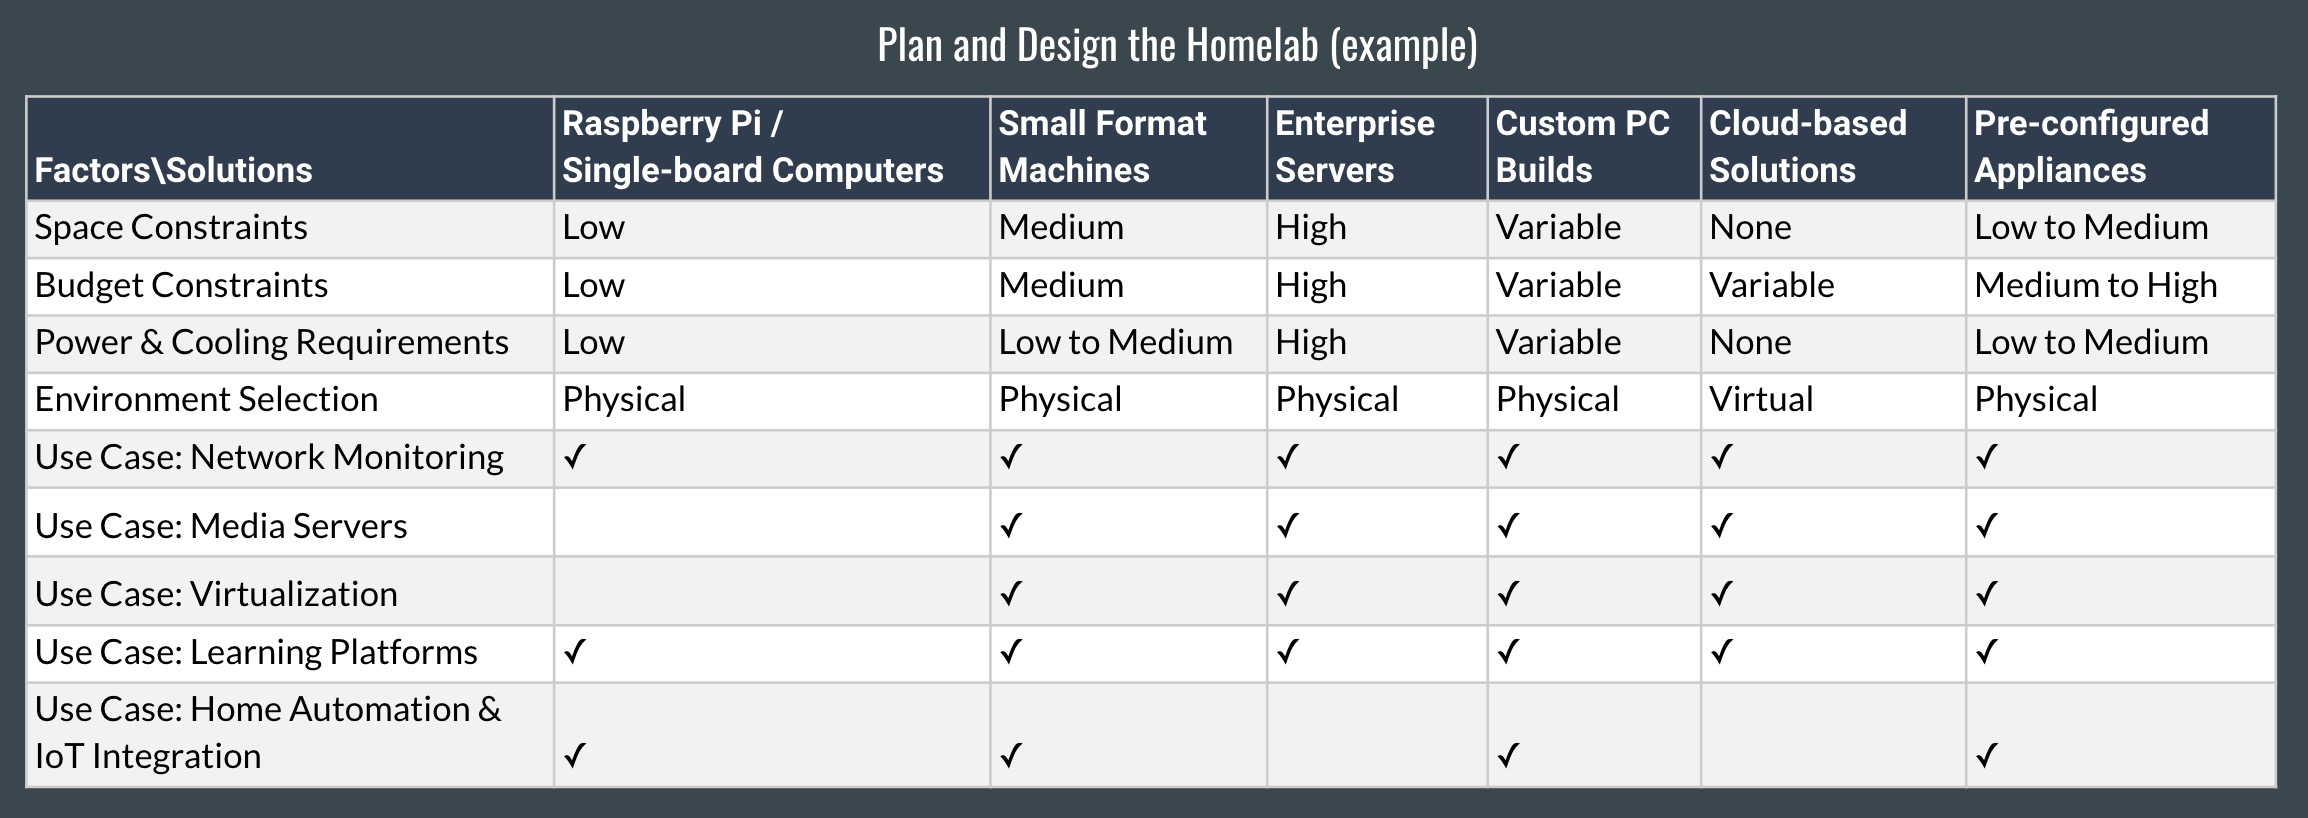 Matrix - Homelab Plan